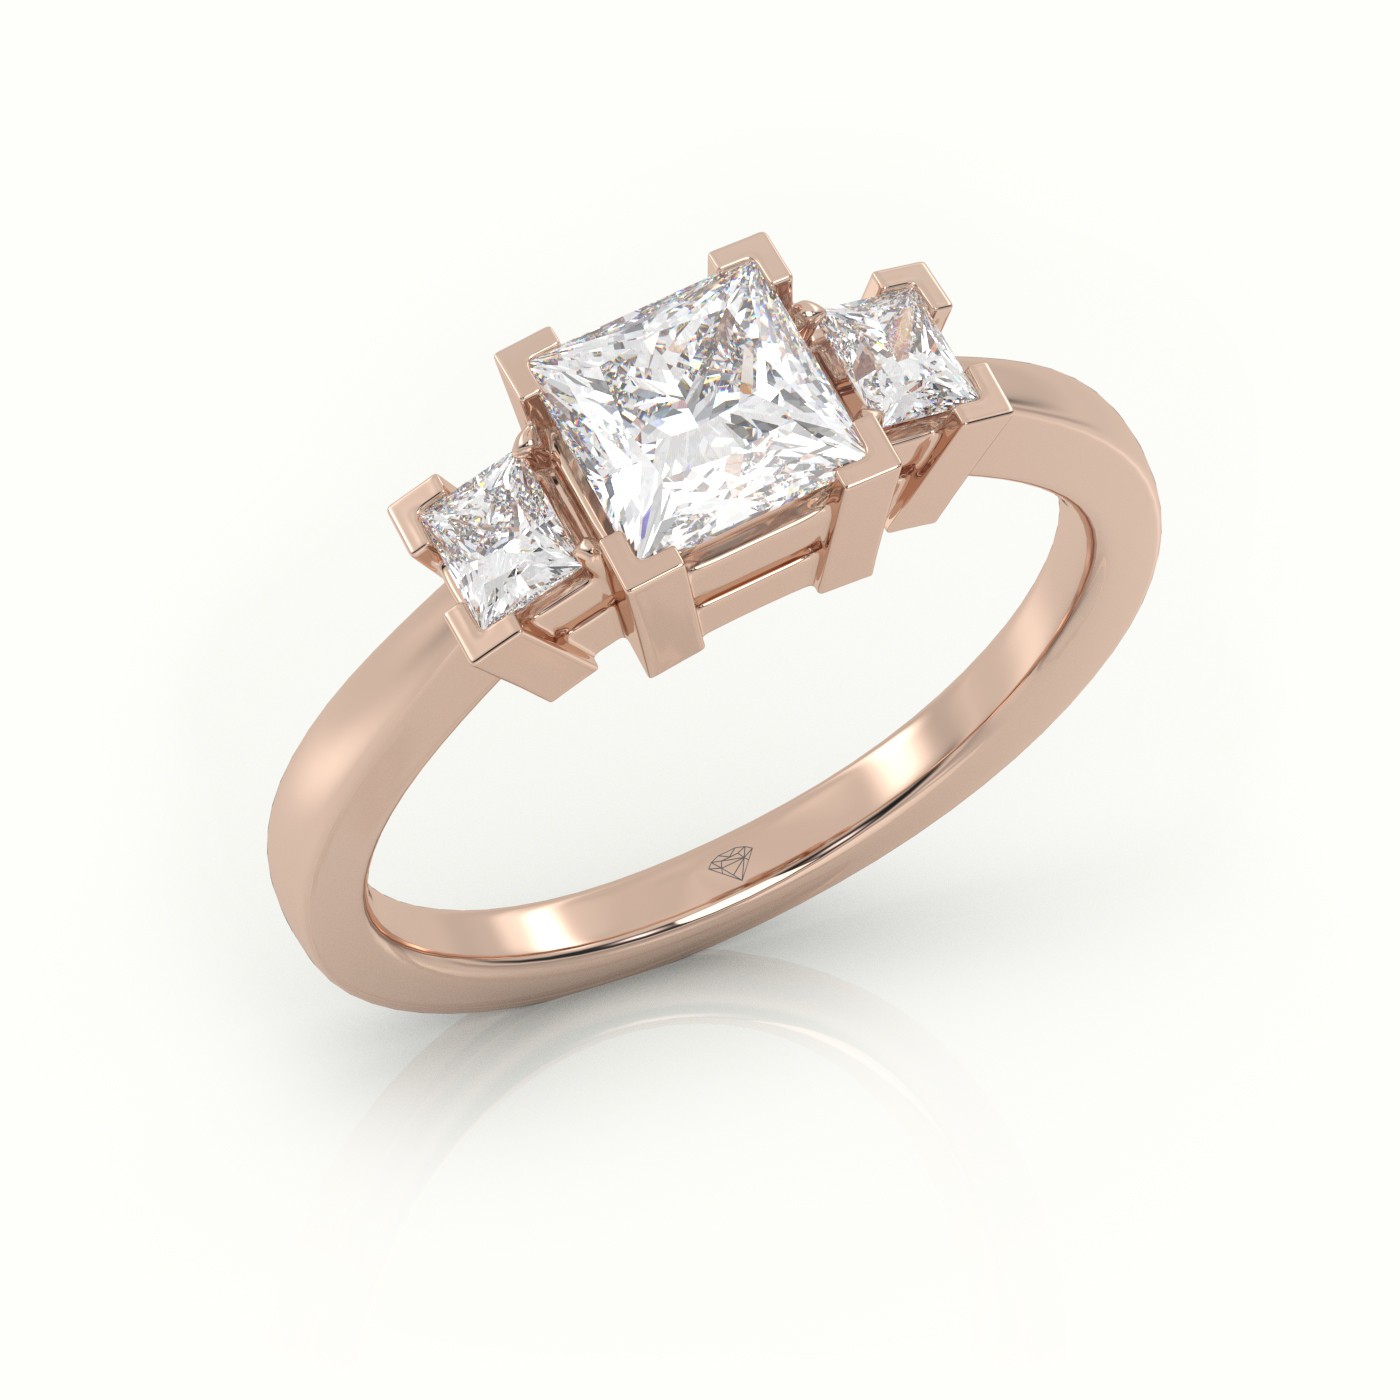 18K ROSE GOLD PRINCESS CUT DIAMOND SIDE STONES ENGAGEMENT RING